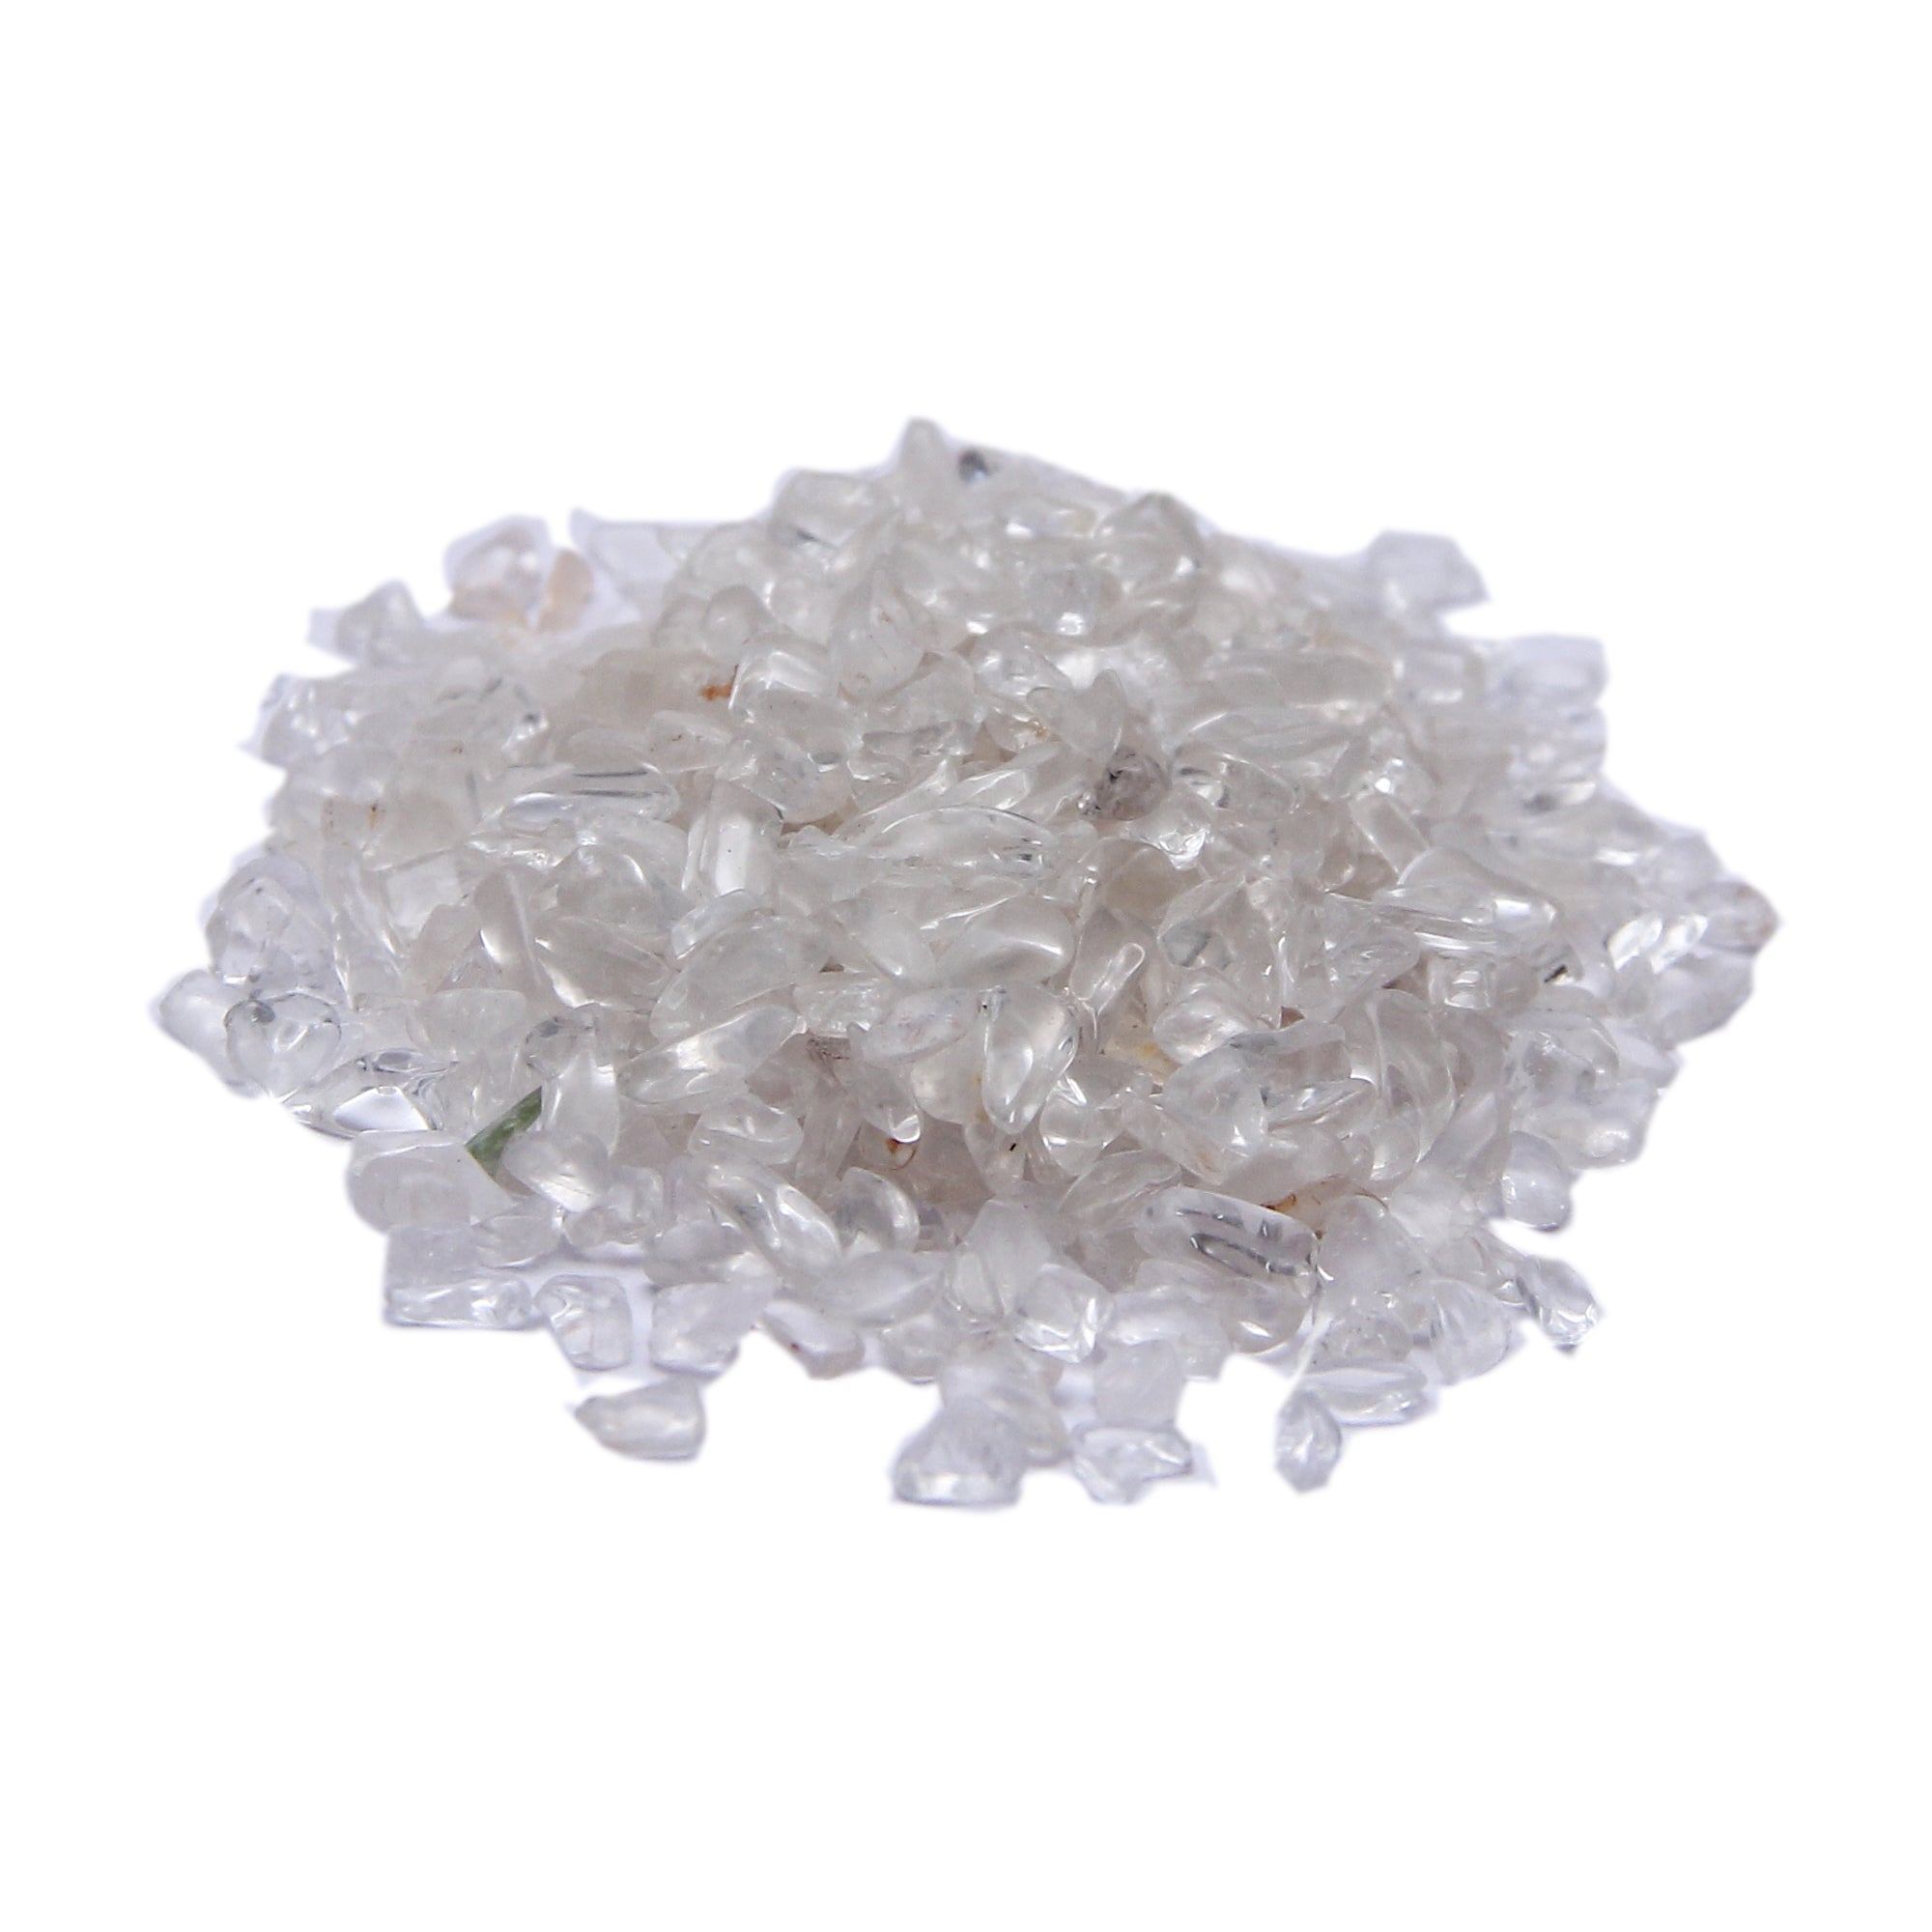 Agate Crystals Small 100Grams Jar